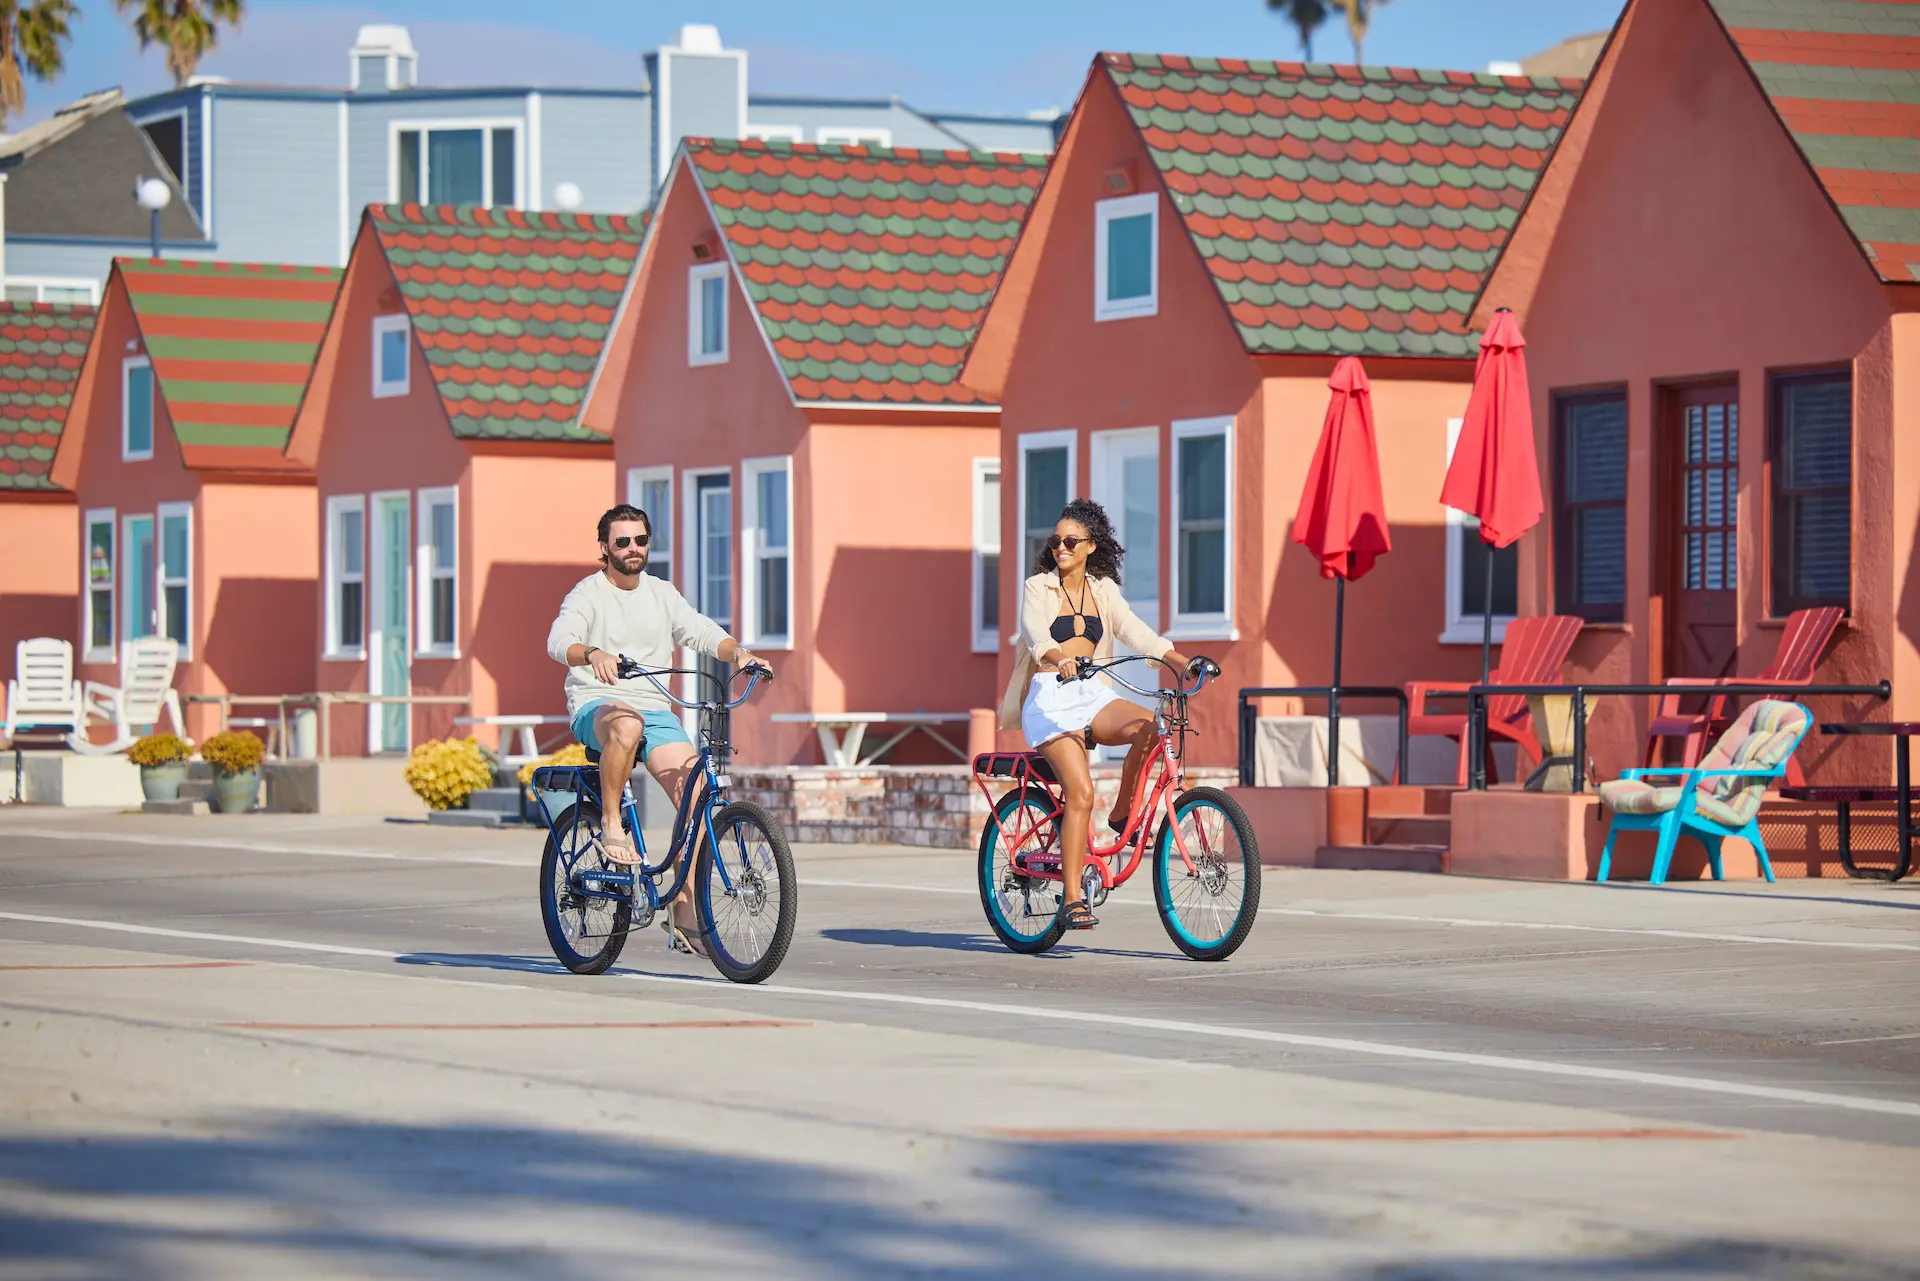 Two people on bikes around a neighborhood